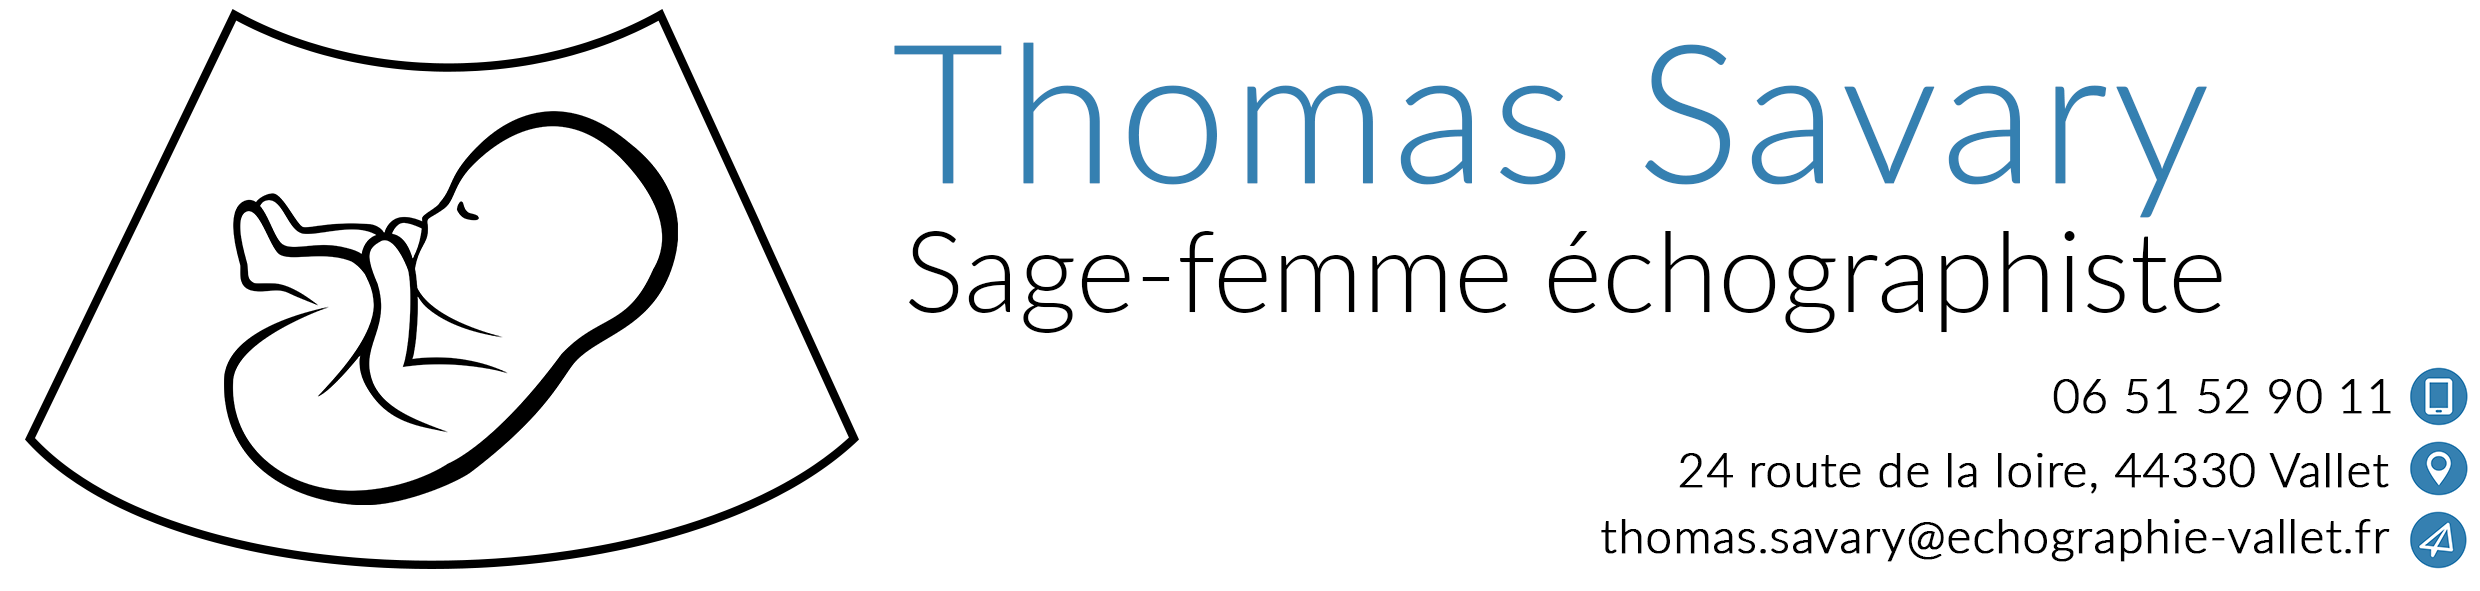 Thomas Savary, sage-femme